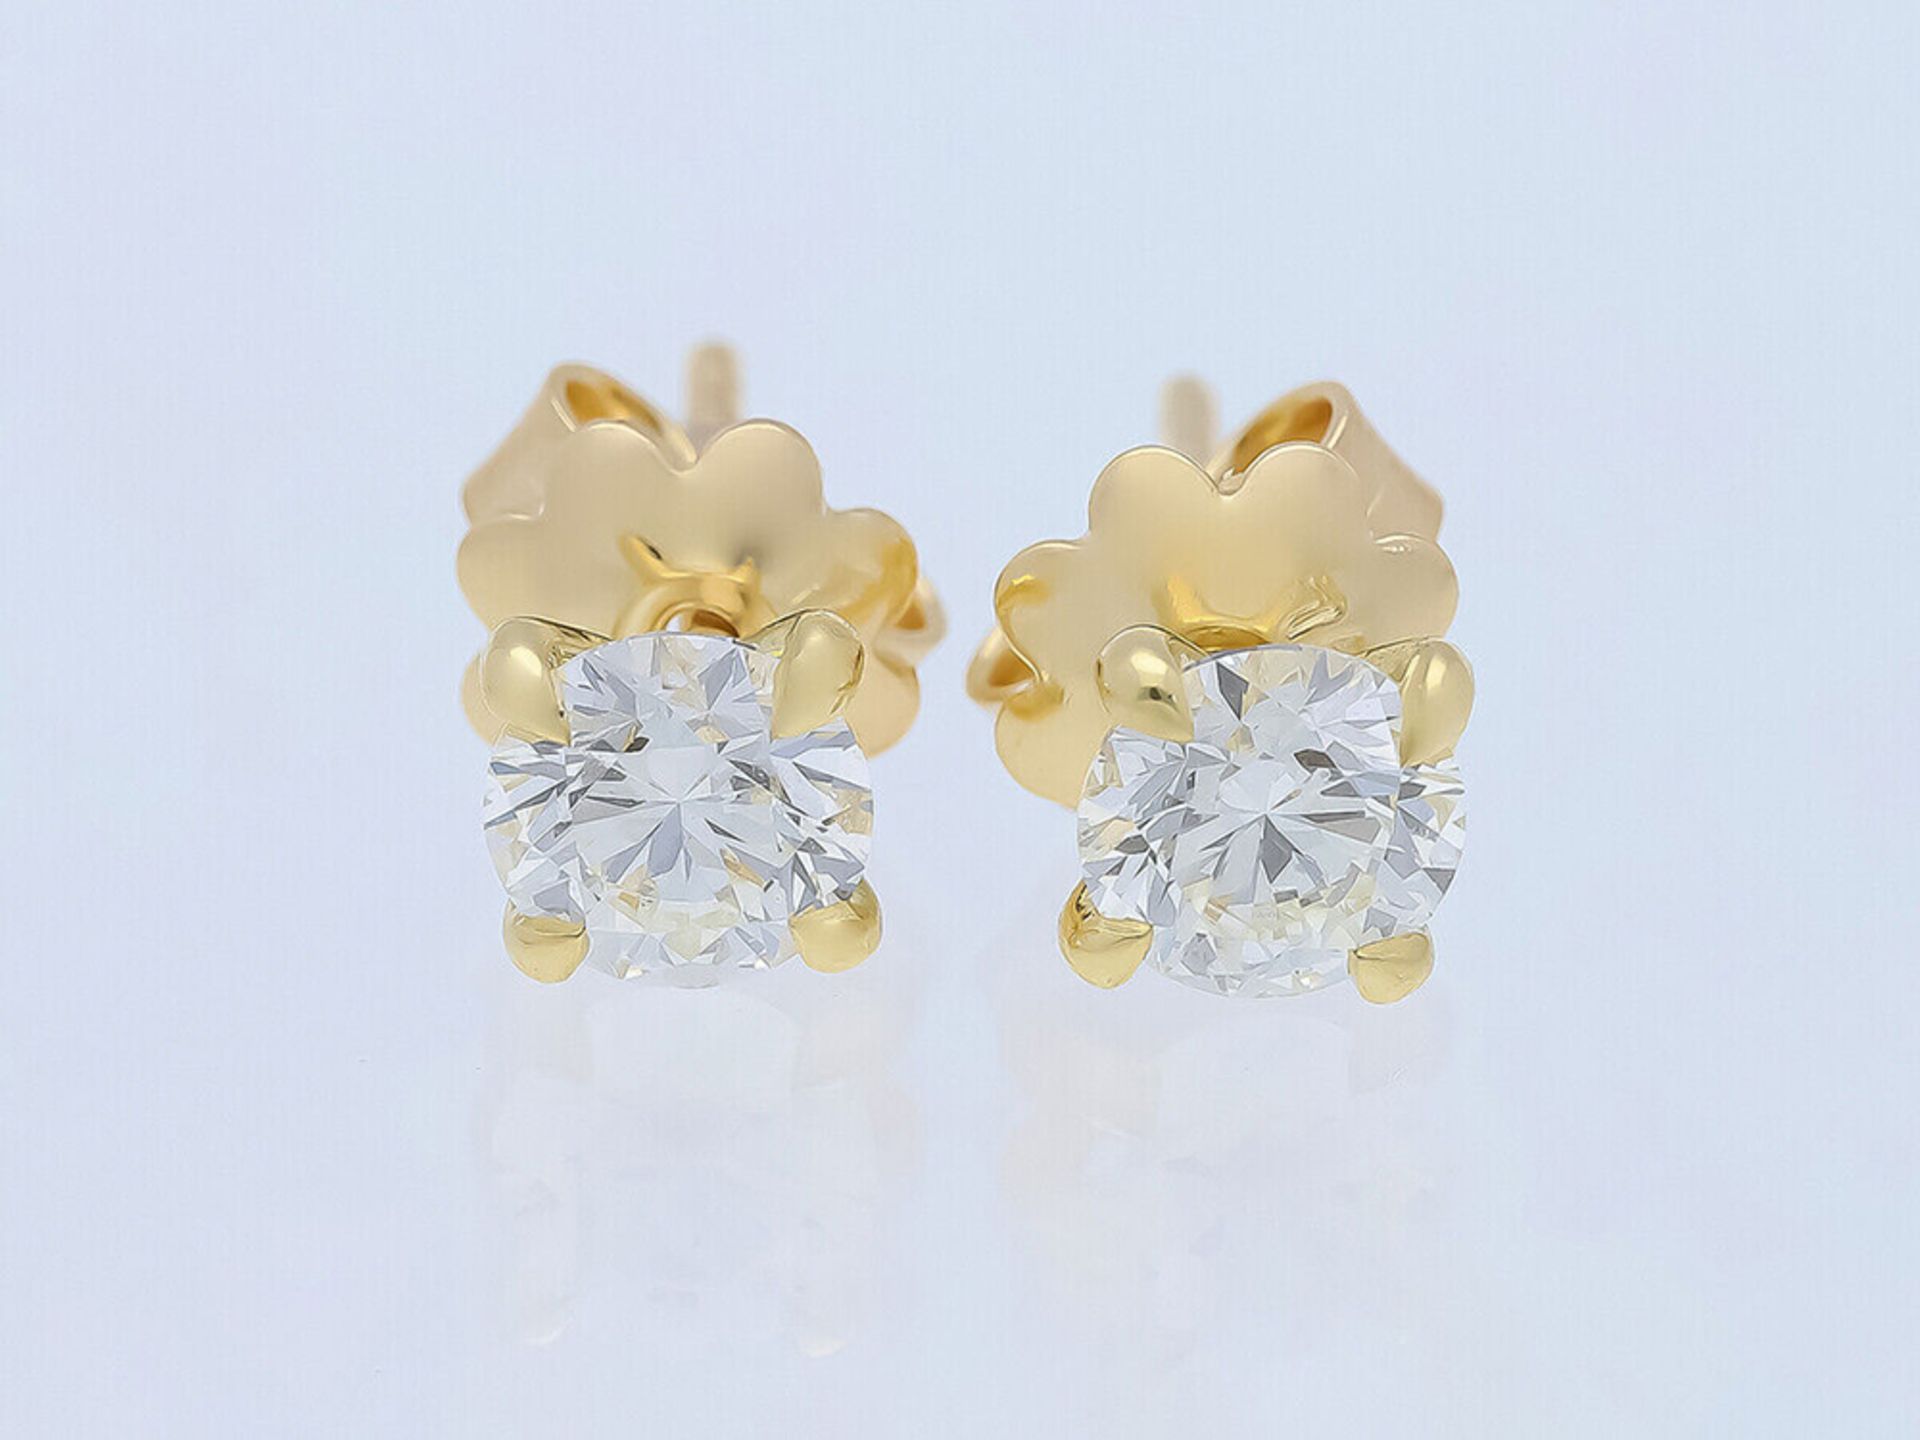 Ohrringe Diamant 750 / 18 Karat Gelbgold mit IGI Zertifikat